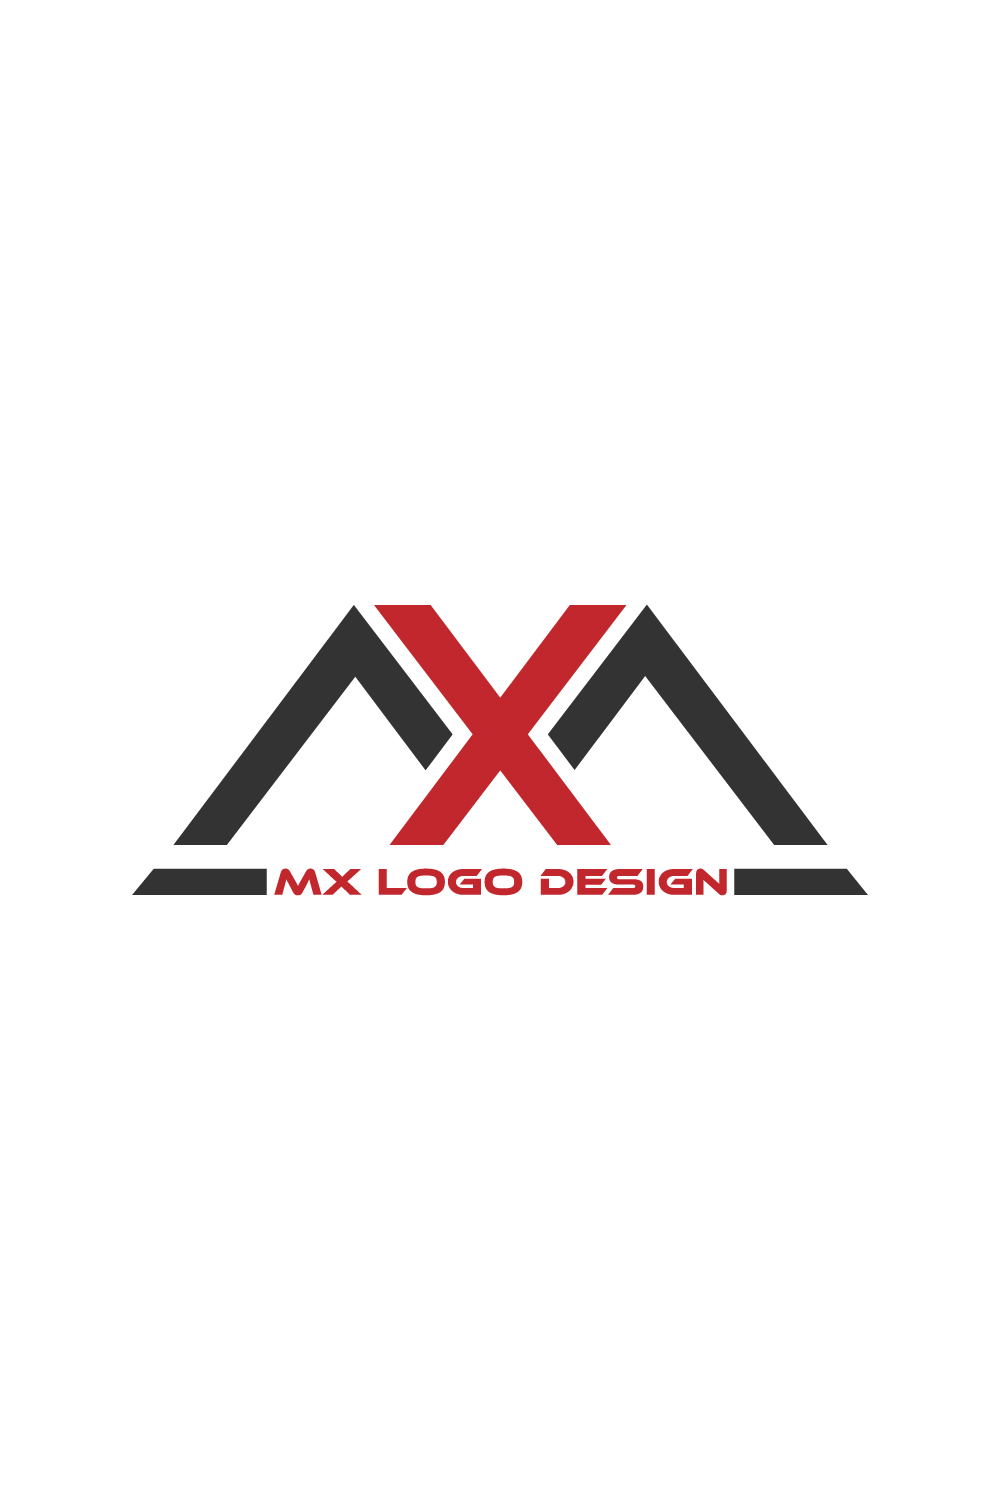 MX logo design pinterest preview image.